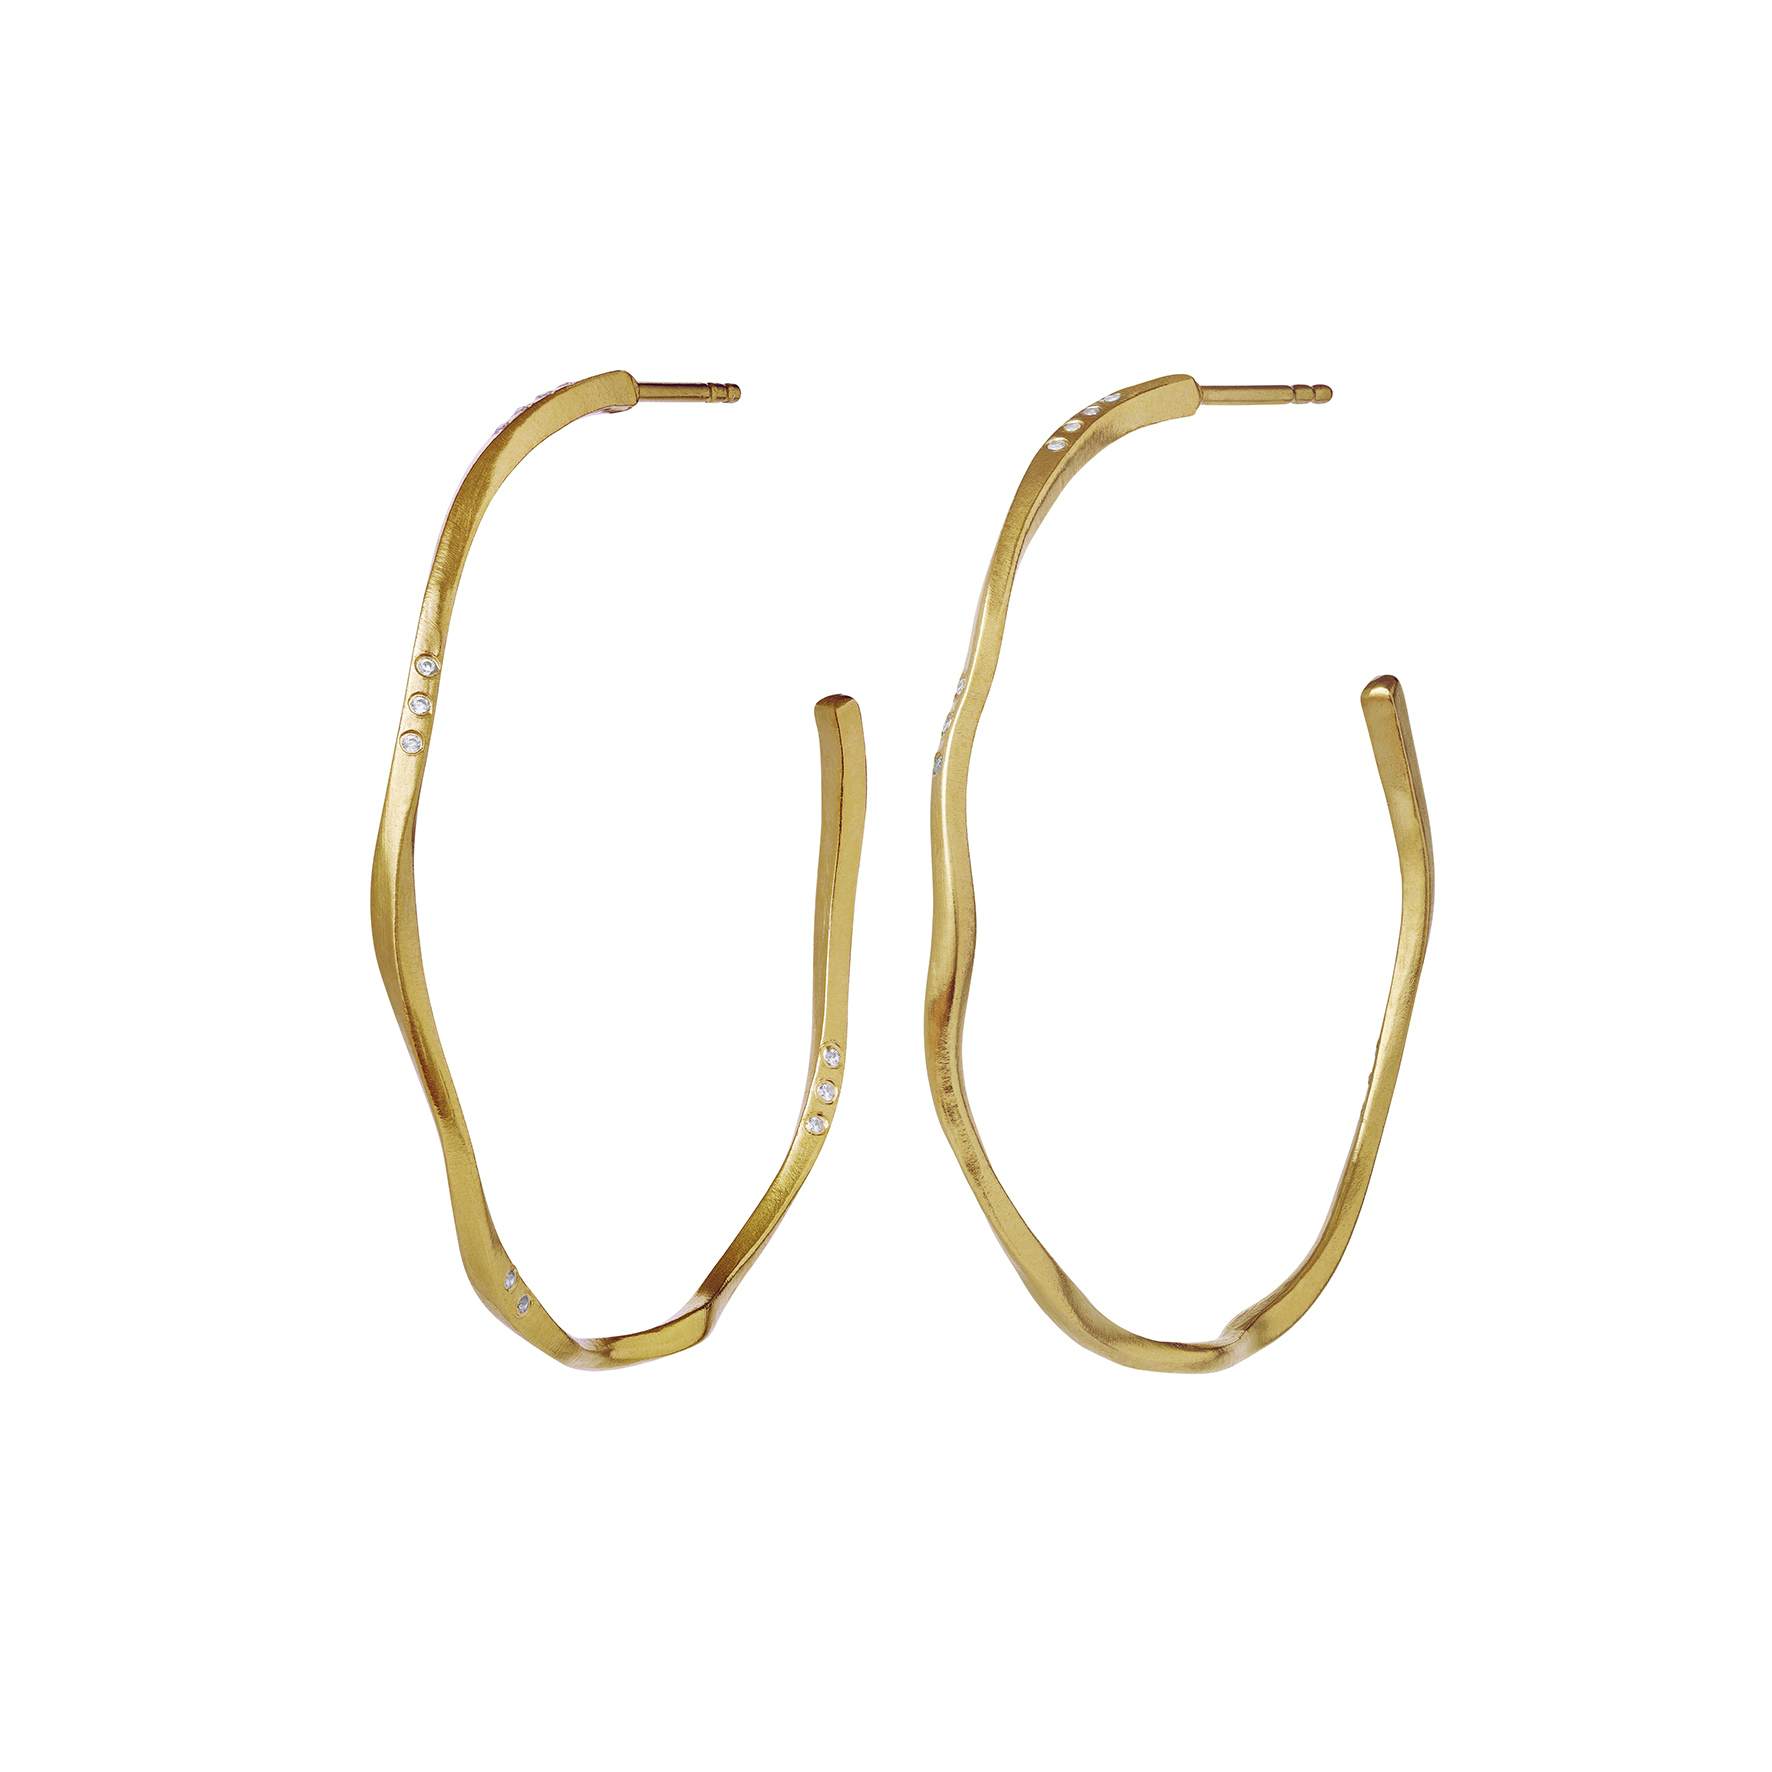 Echo Grande Earrings von Maanesten in Vergoldet-Silber Sterling 925